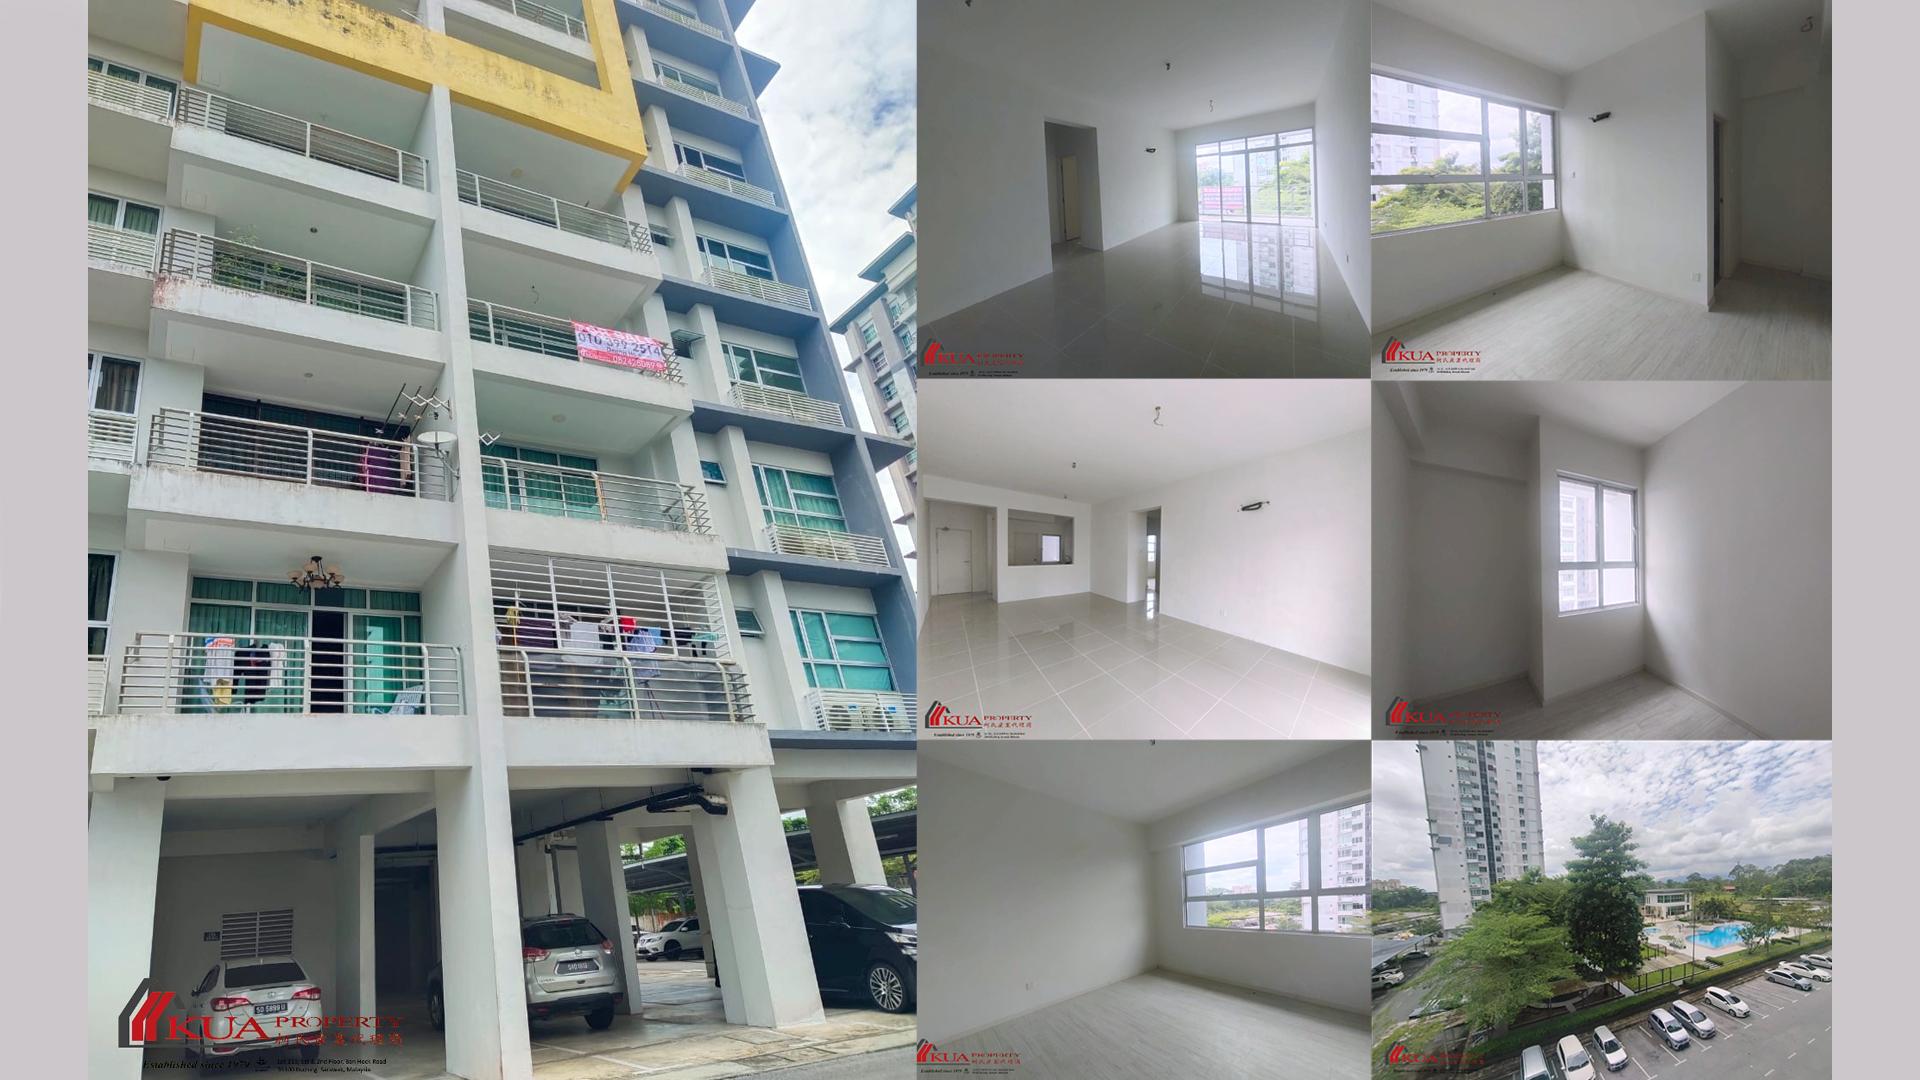 Skyvilla Condominium (Corner Unit) FOR SALE! Located at MJC, Batu Kawa